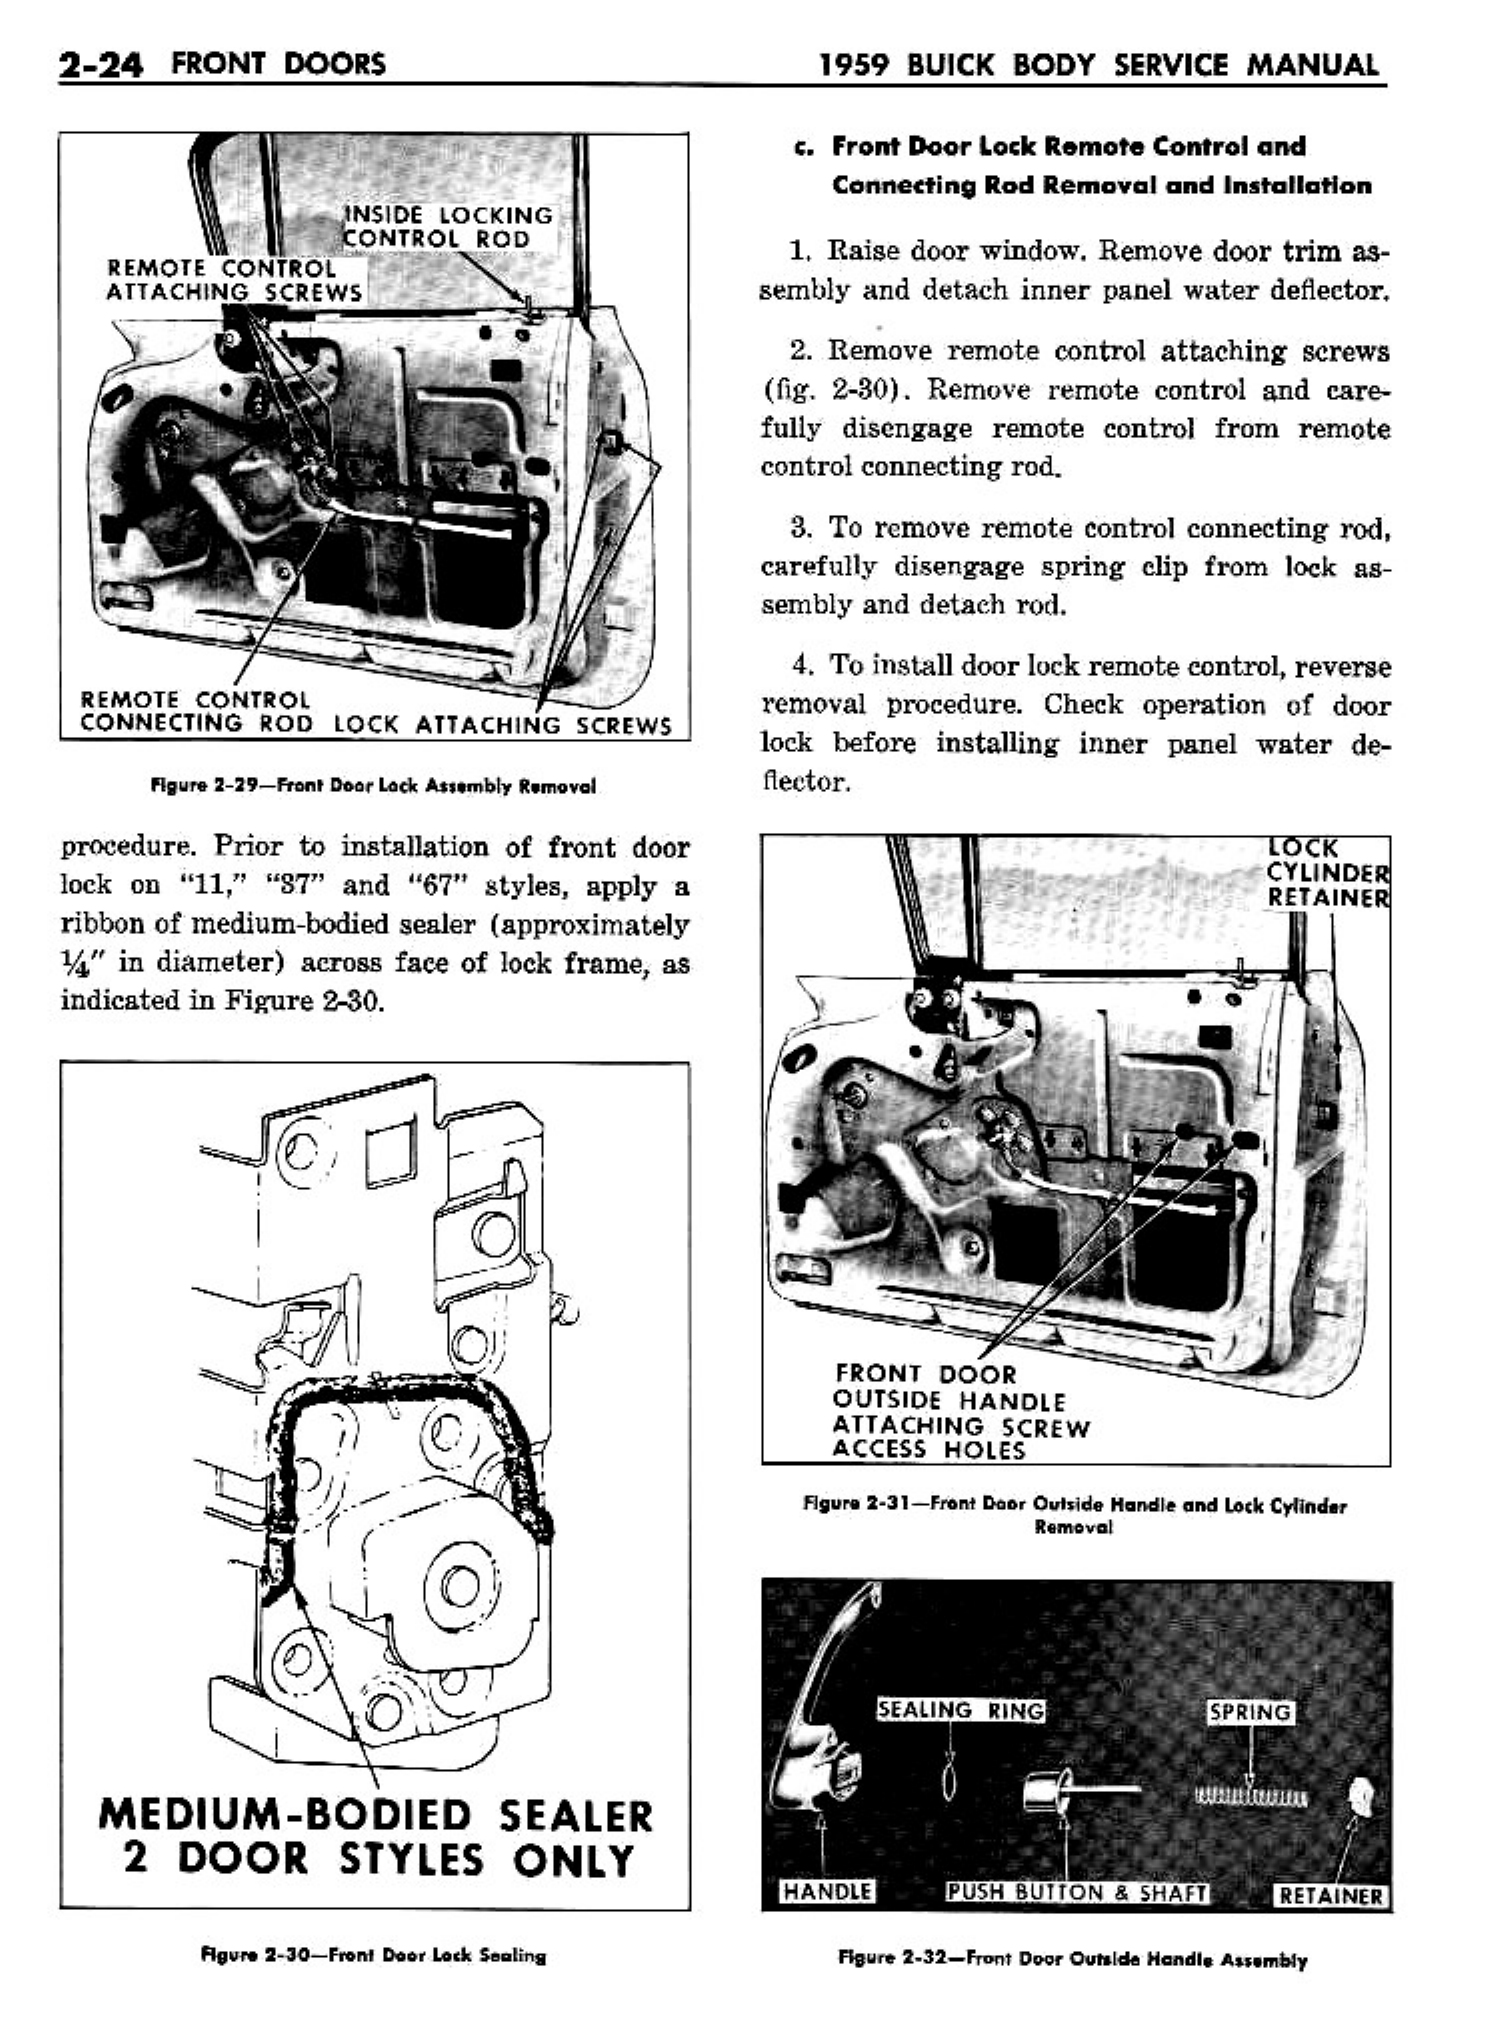 n_03 1959 Buick Body Service-Doors_24.jpg